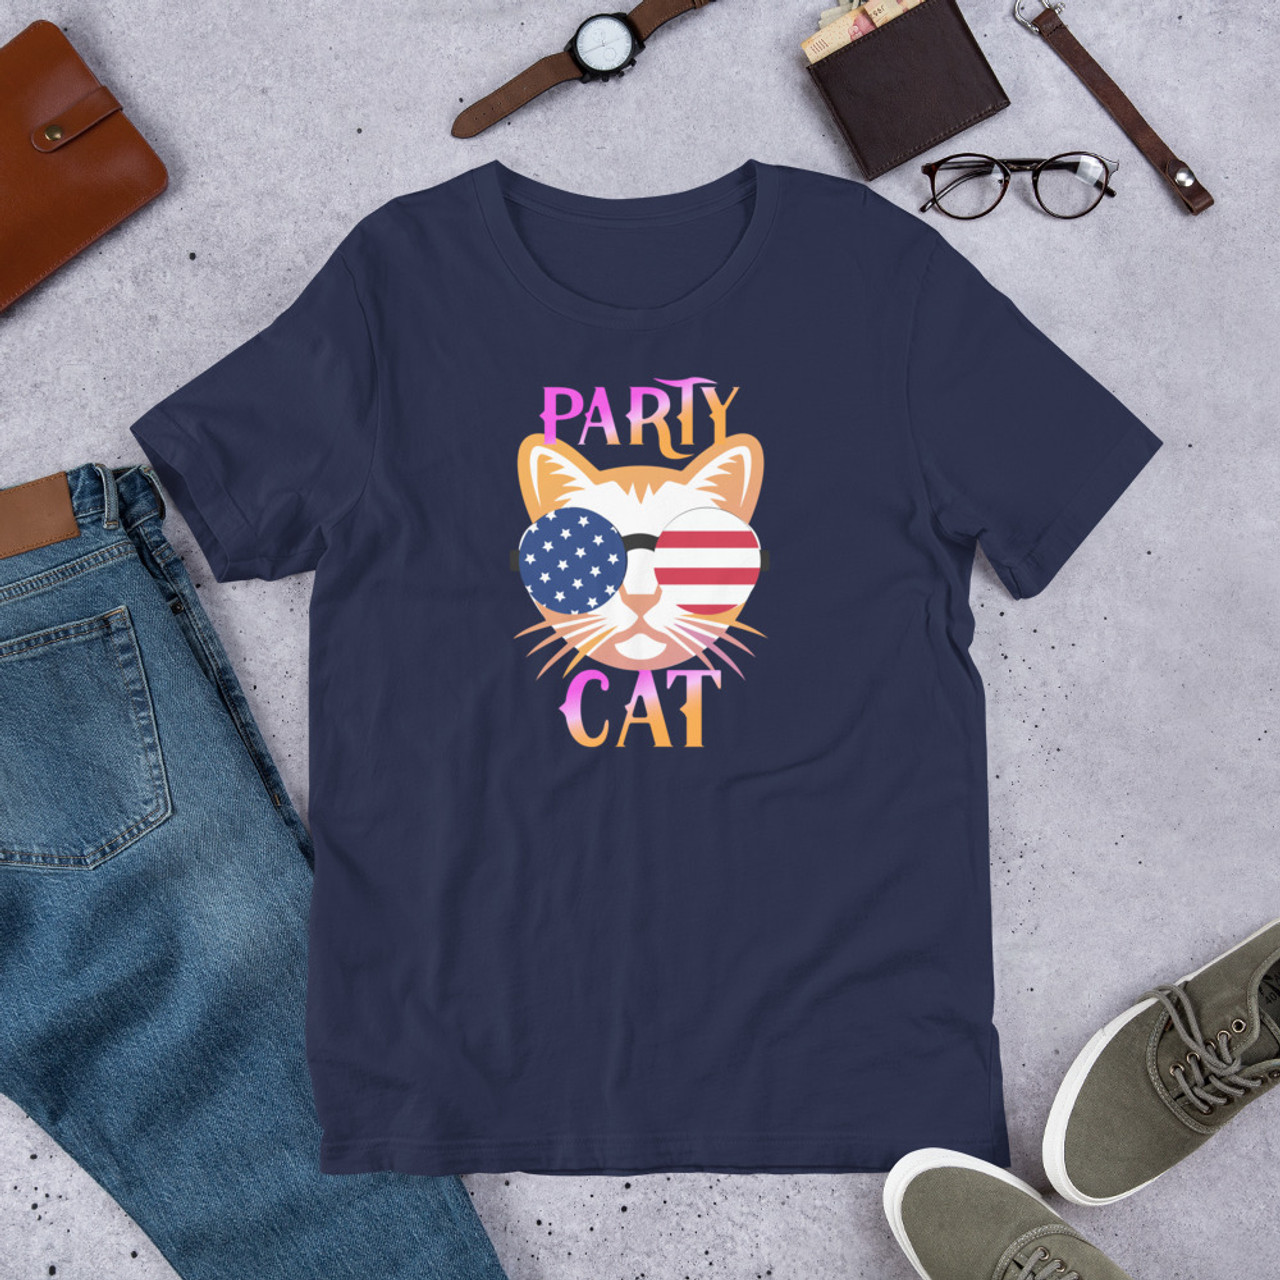 Navy T-Shirt - Bella + Canvas 3001 Party Cat